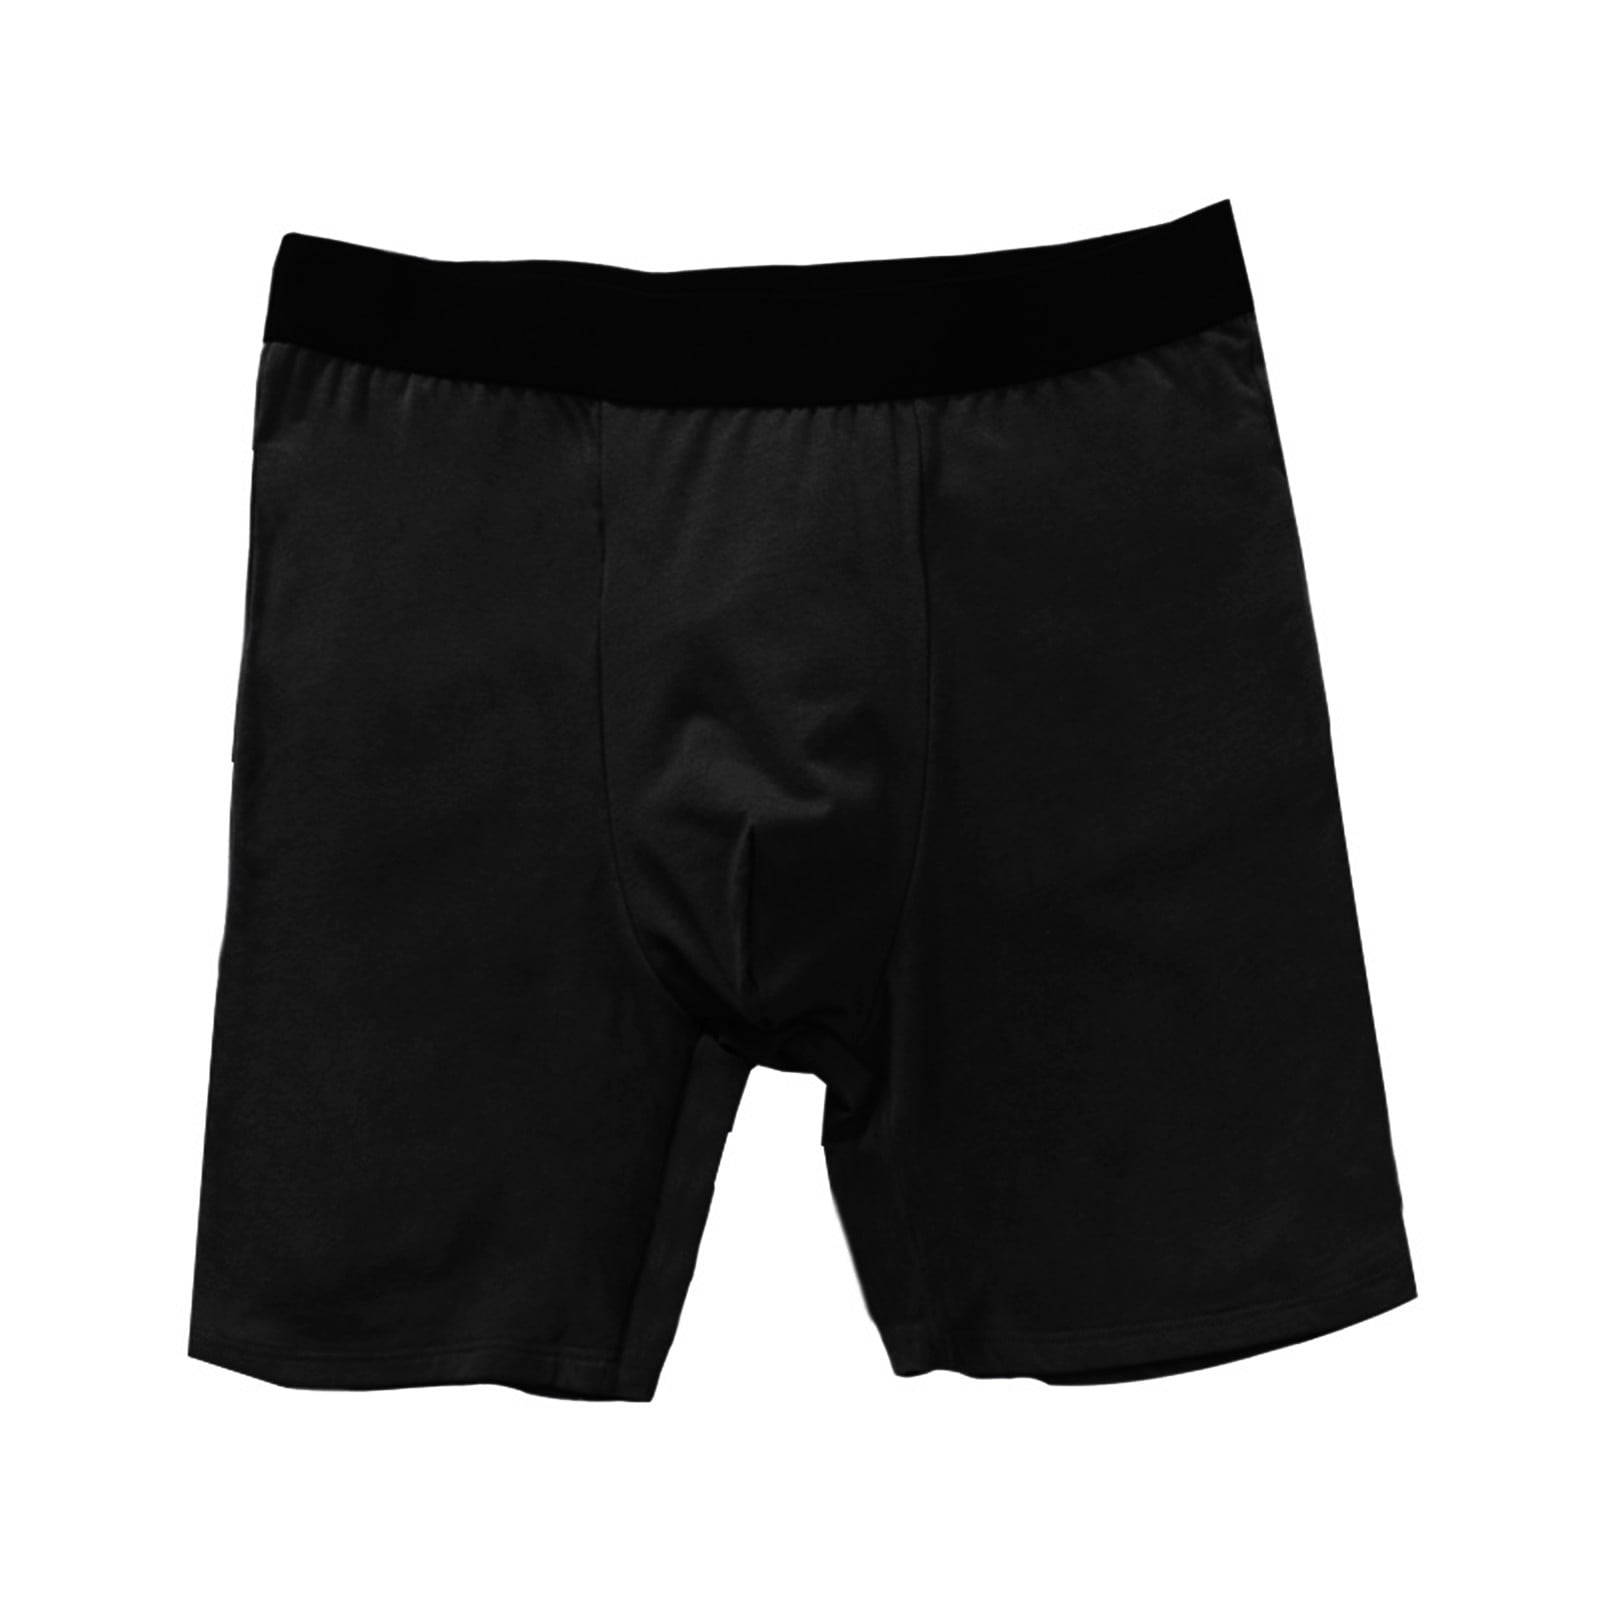 KaLI_store Men Boxers Men's Underwear - Performance Boxer Briefs